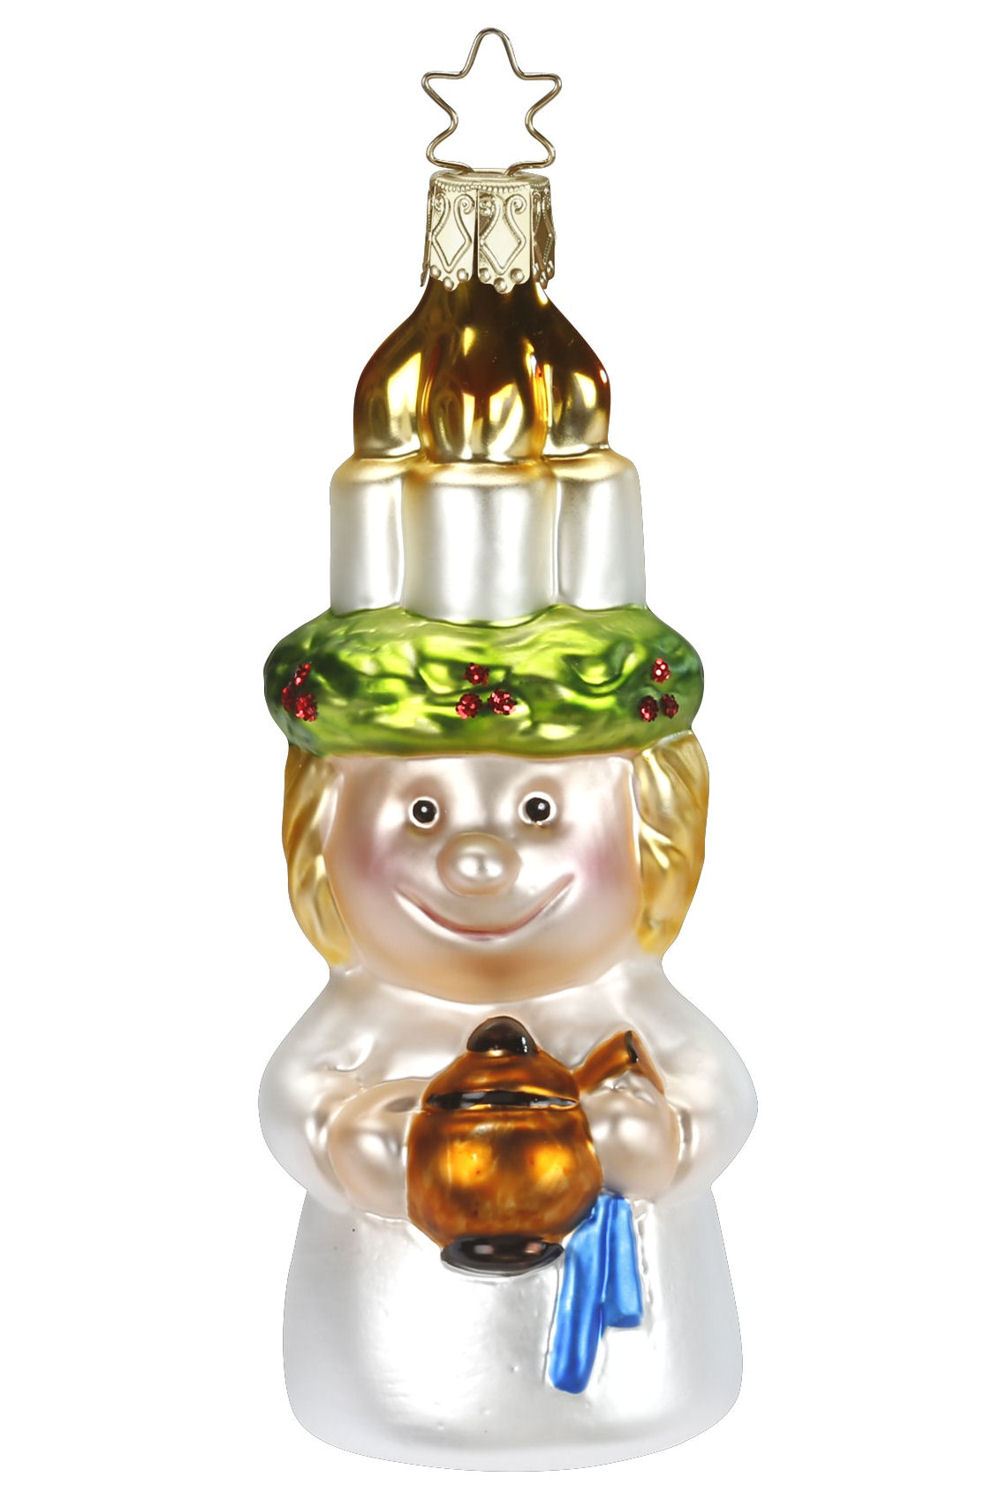 Inge-Glas Child Star Leader 10009S018 German Glass Christmas Ornament 